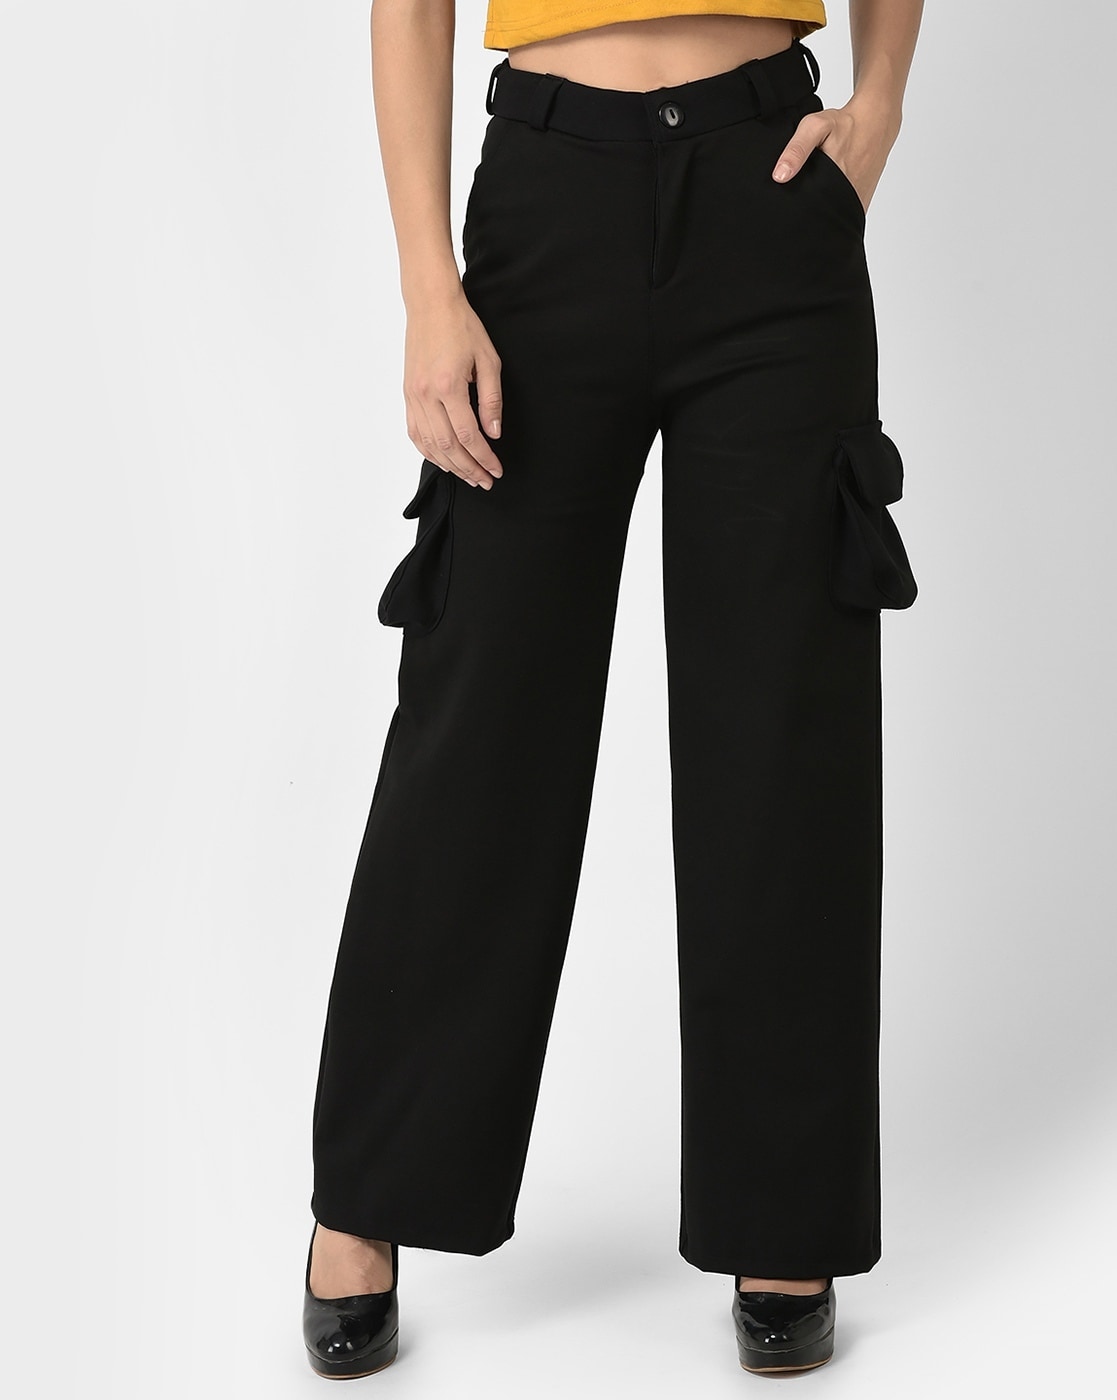 Women's Black Cargo Pants High Rise Wide Leg | Ally Fashion